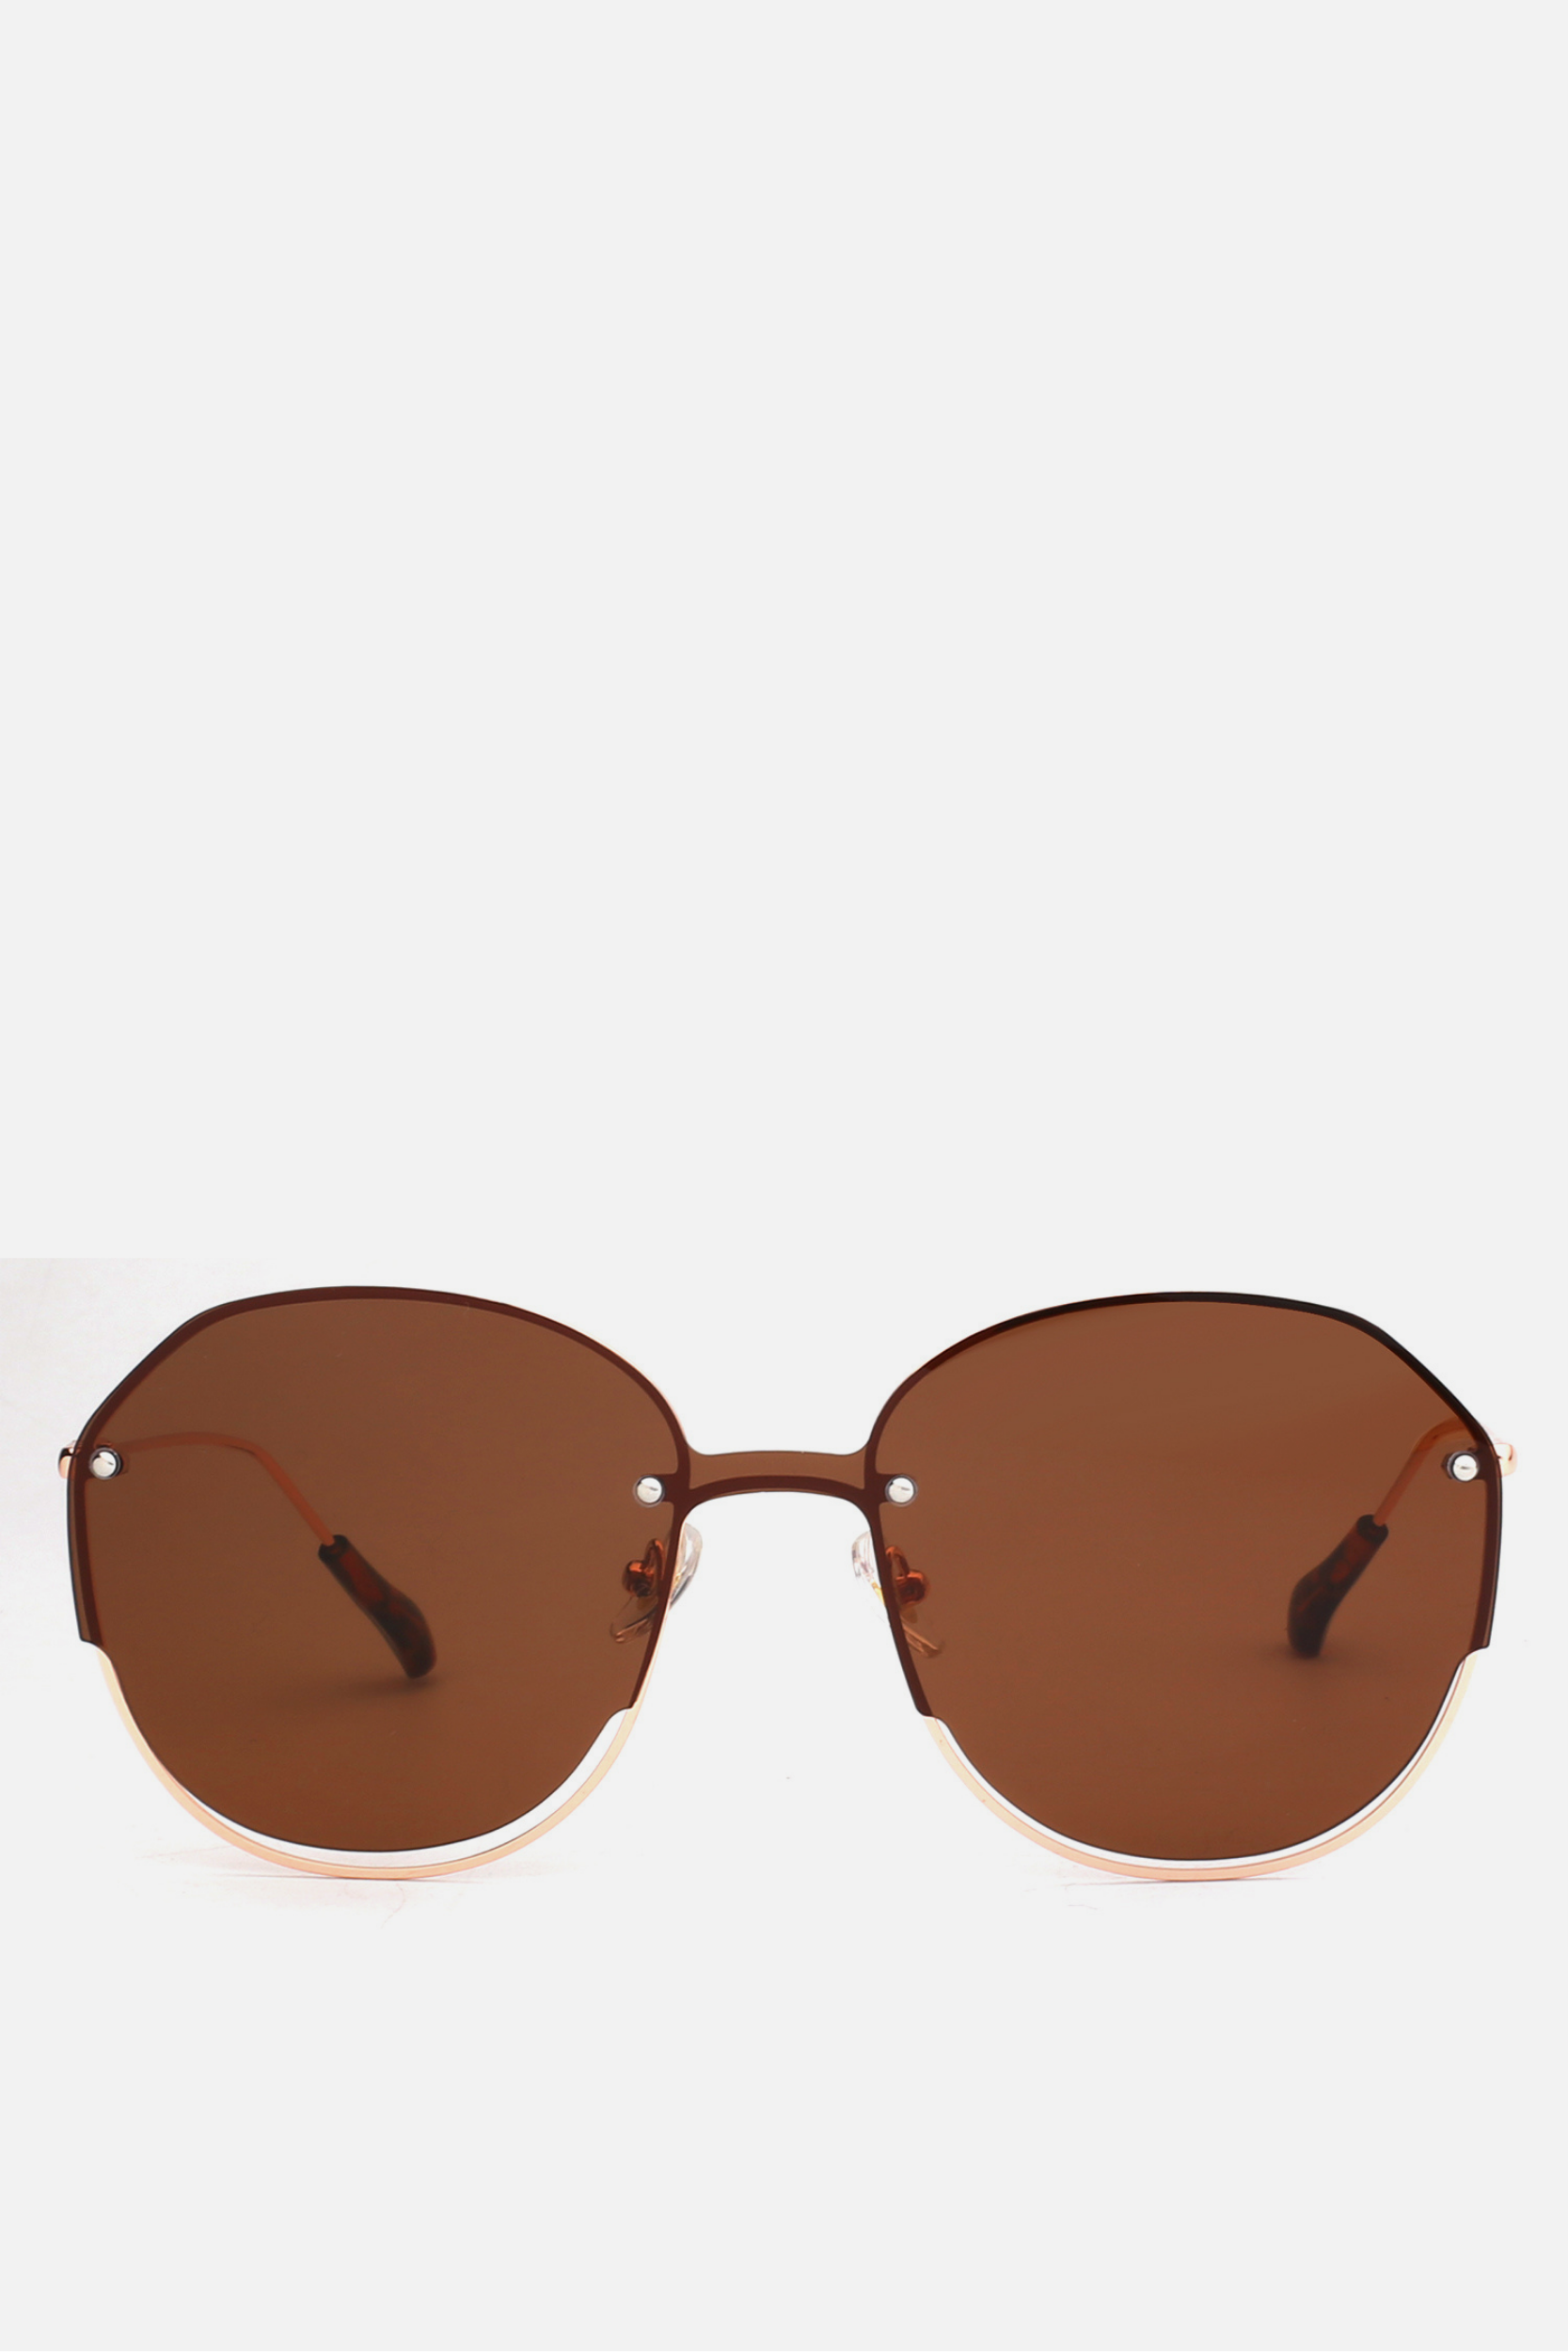 ST LUCIA Round Brown Sunglasses